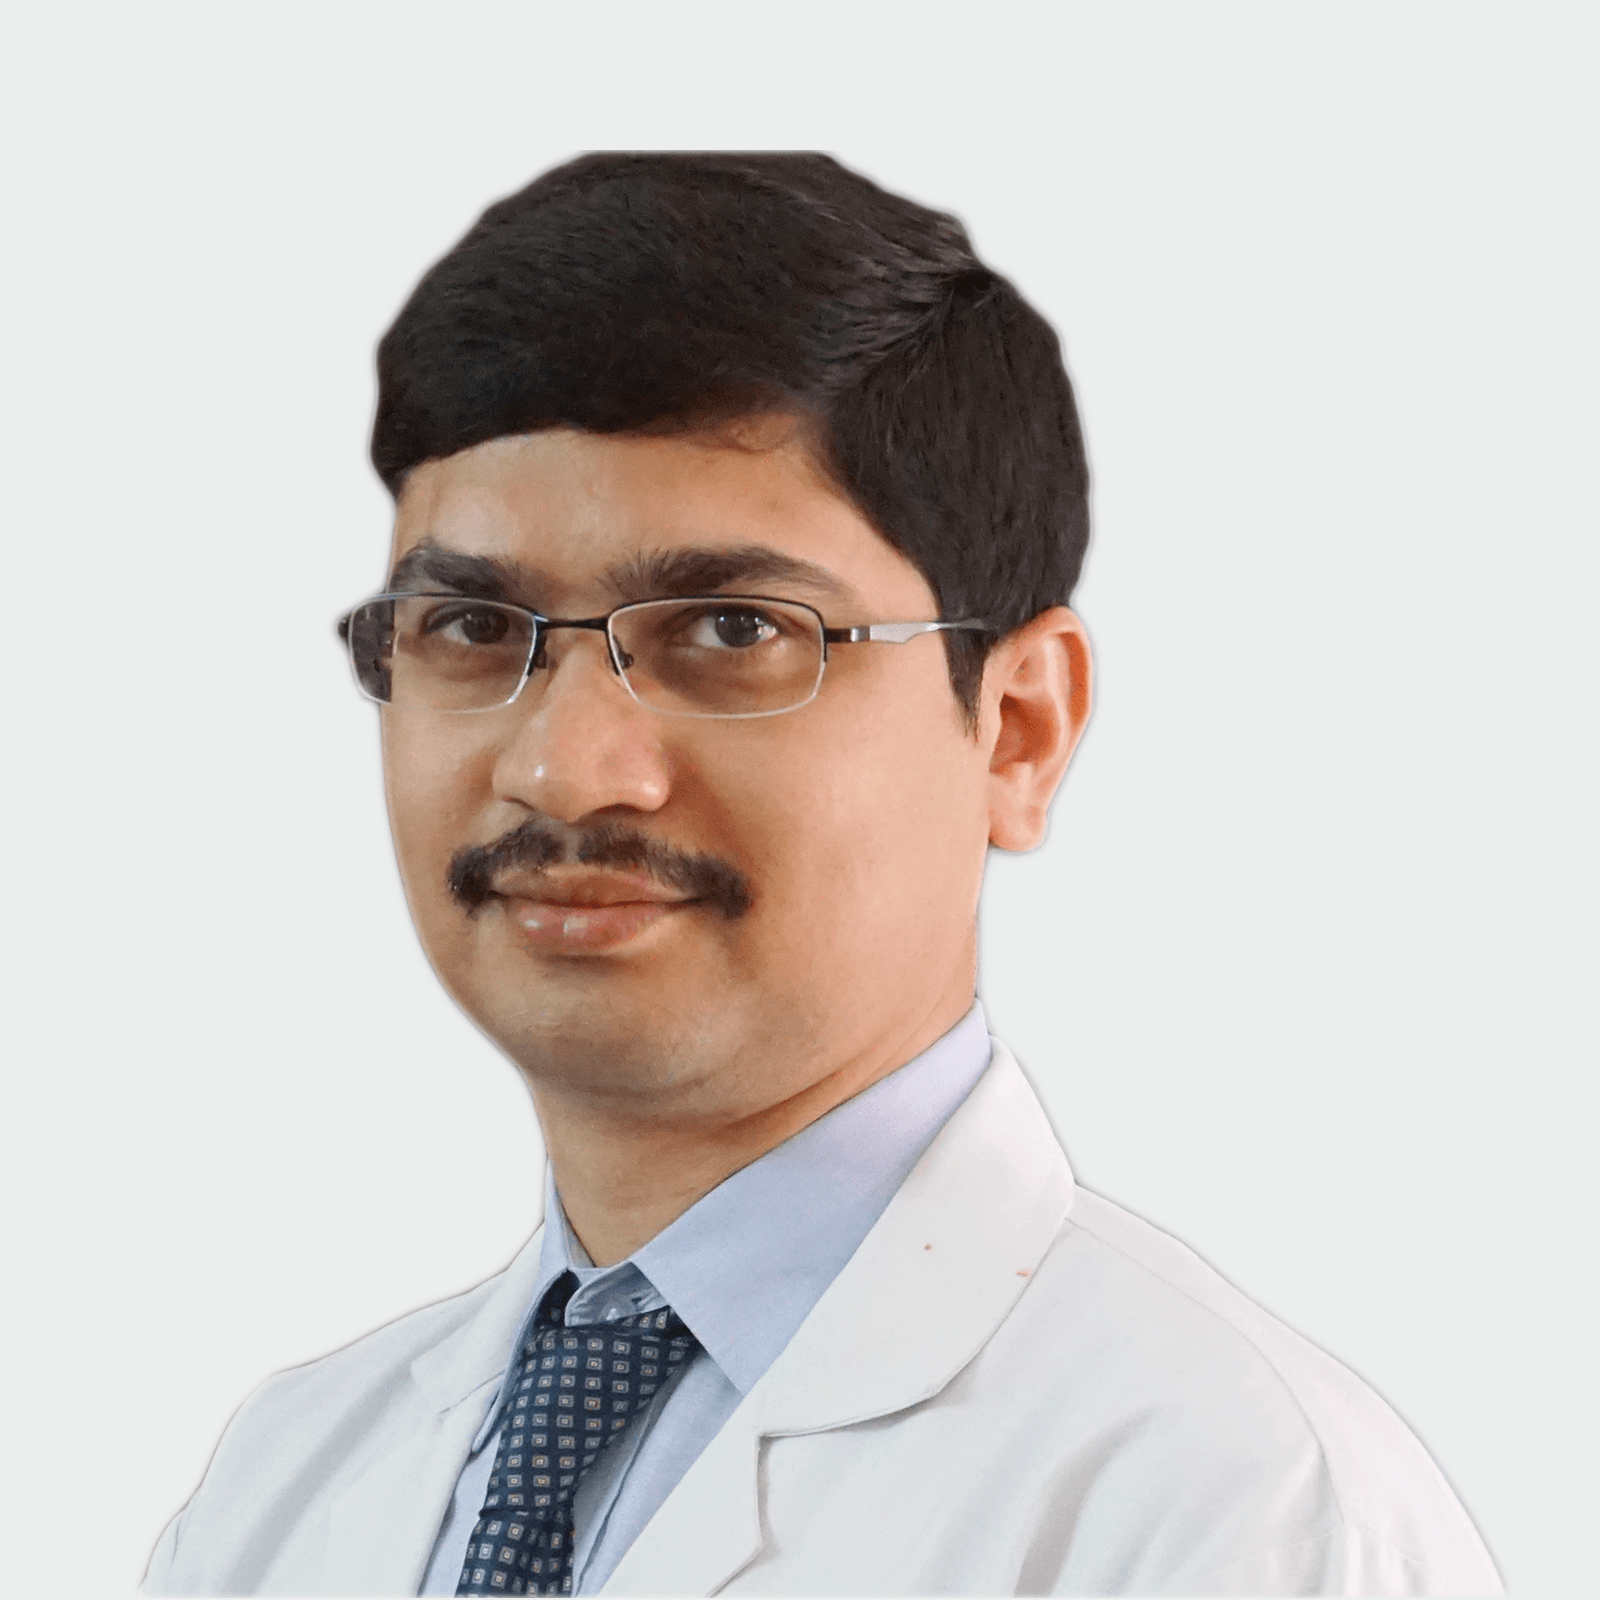 Dr. Prabhat Yaji